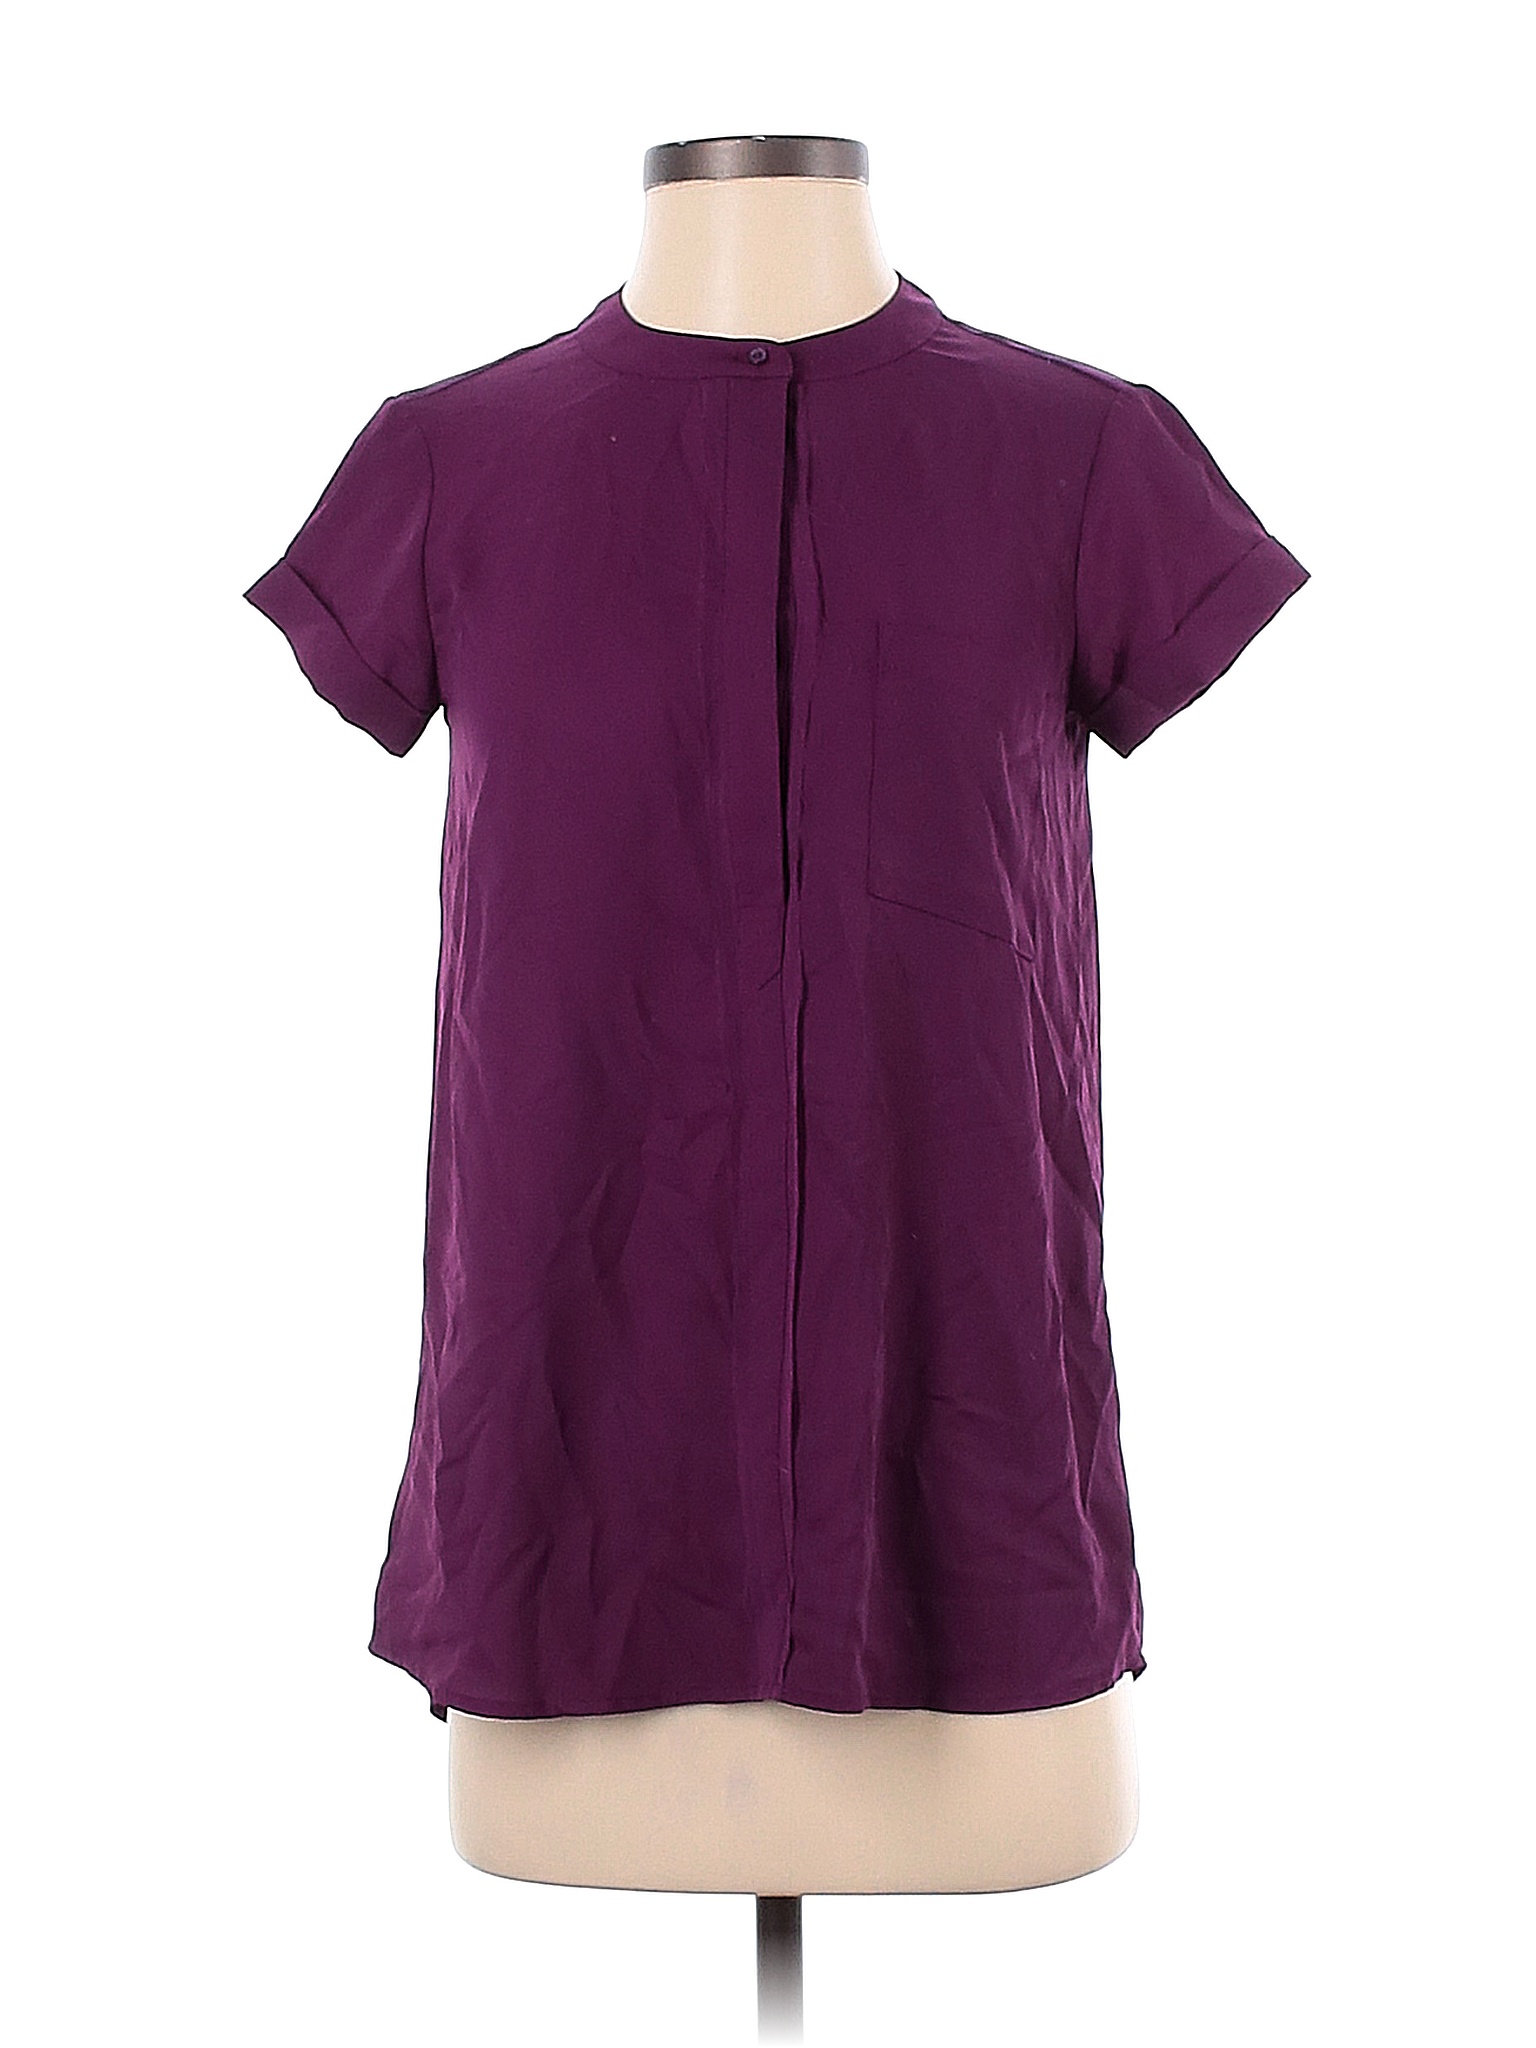 Simply Vera Vera Wang 100% Polyester Solid Purple Short Sleeve Blouse ...